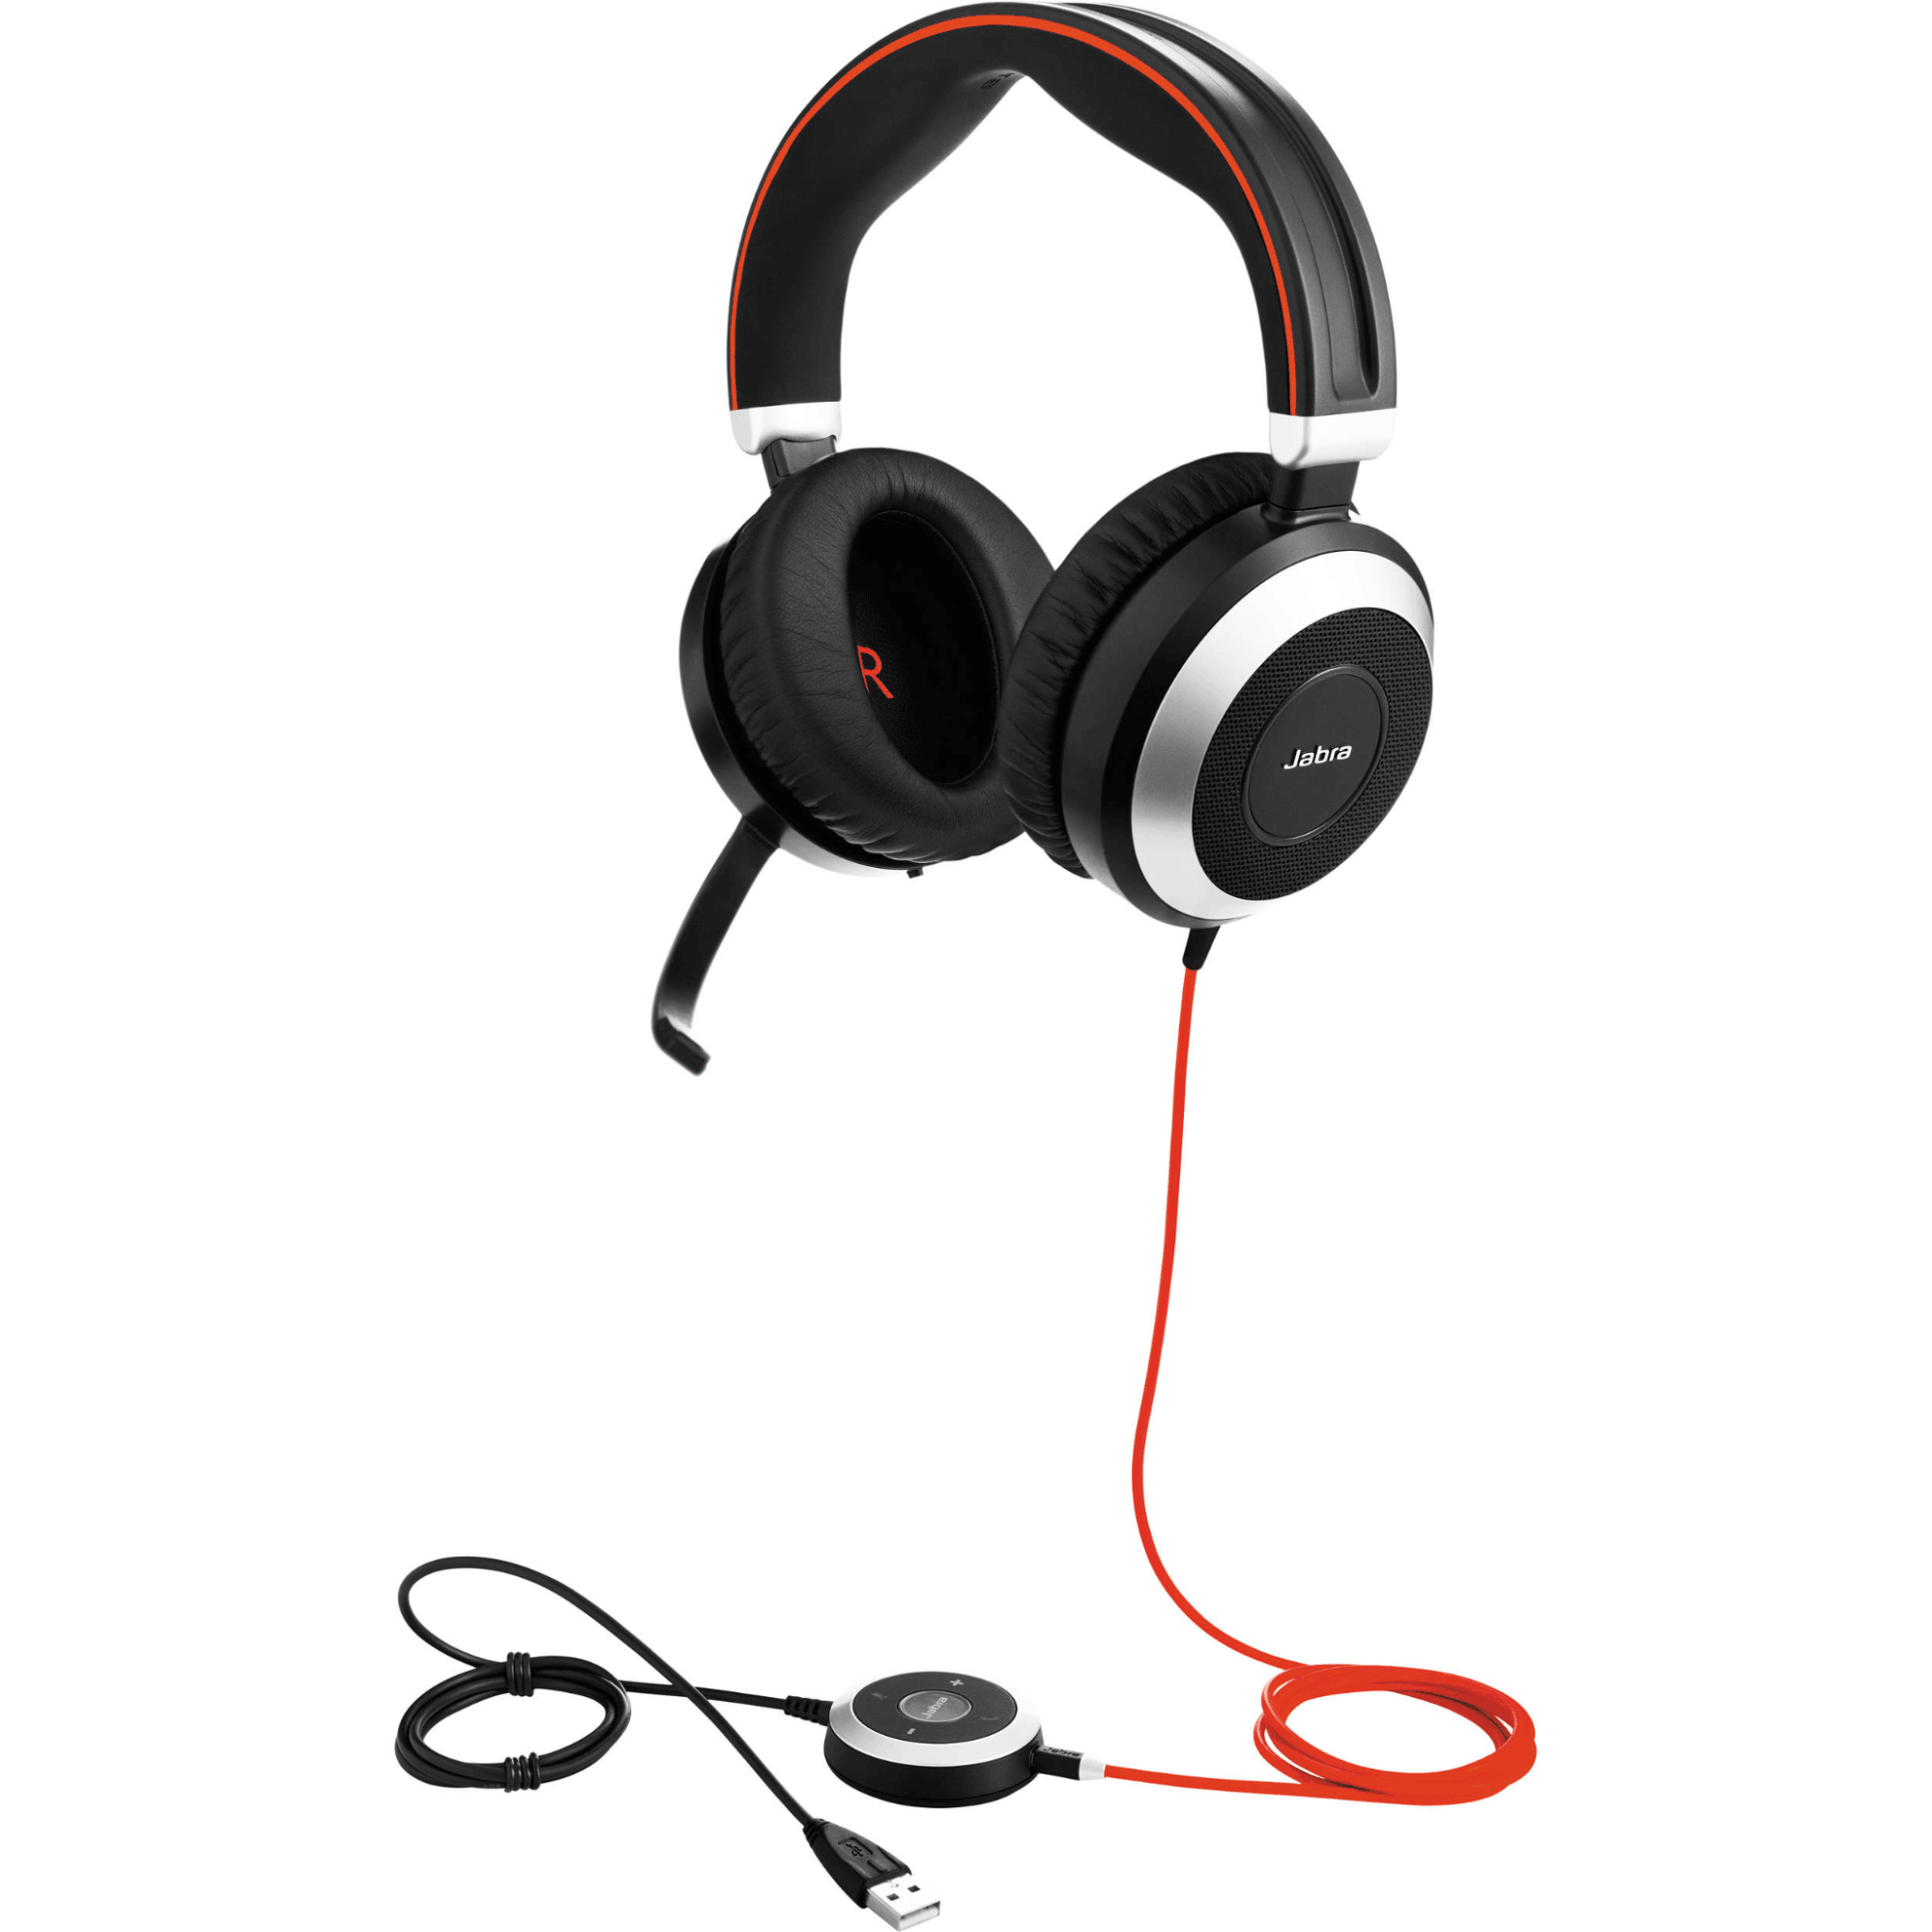 Jabra Evolve 80 headphones